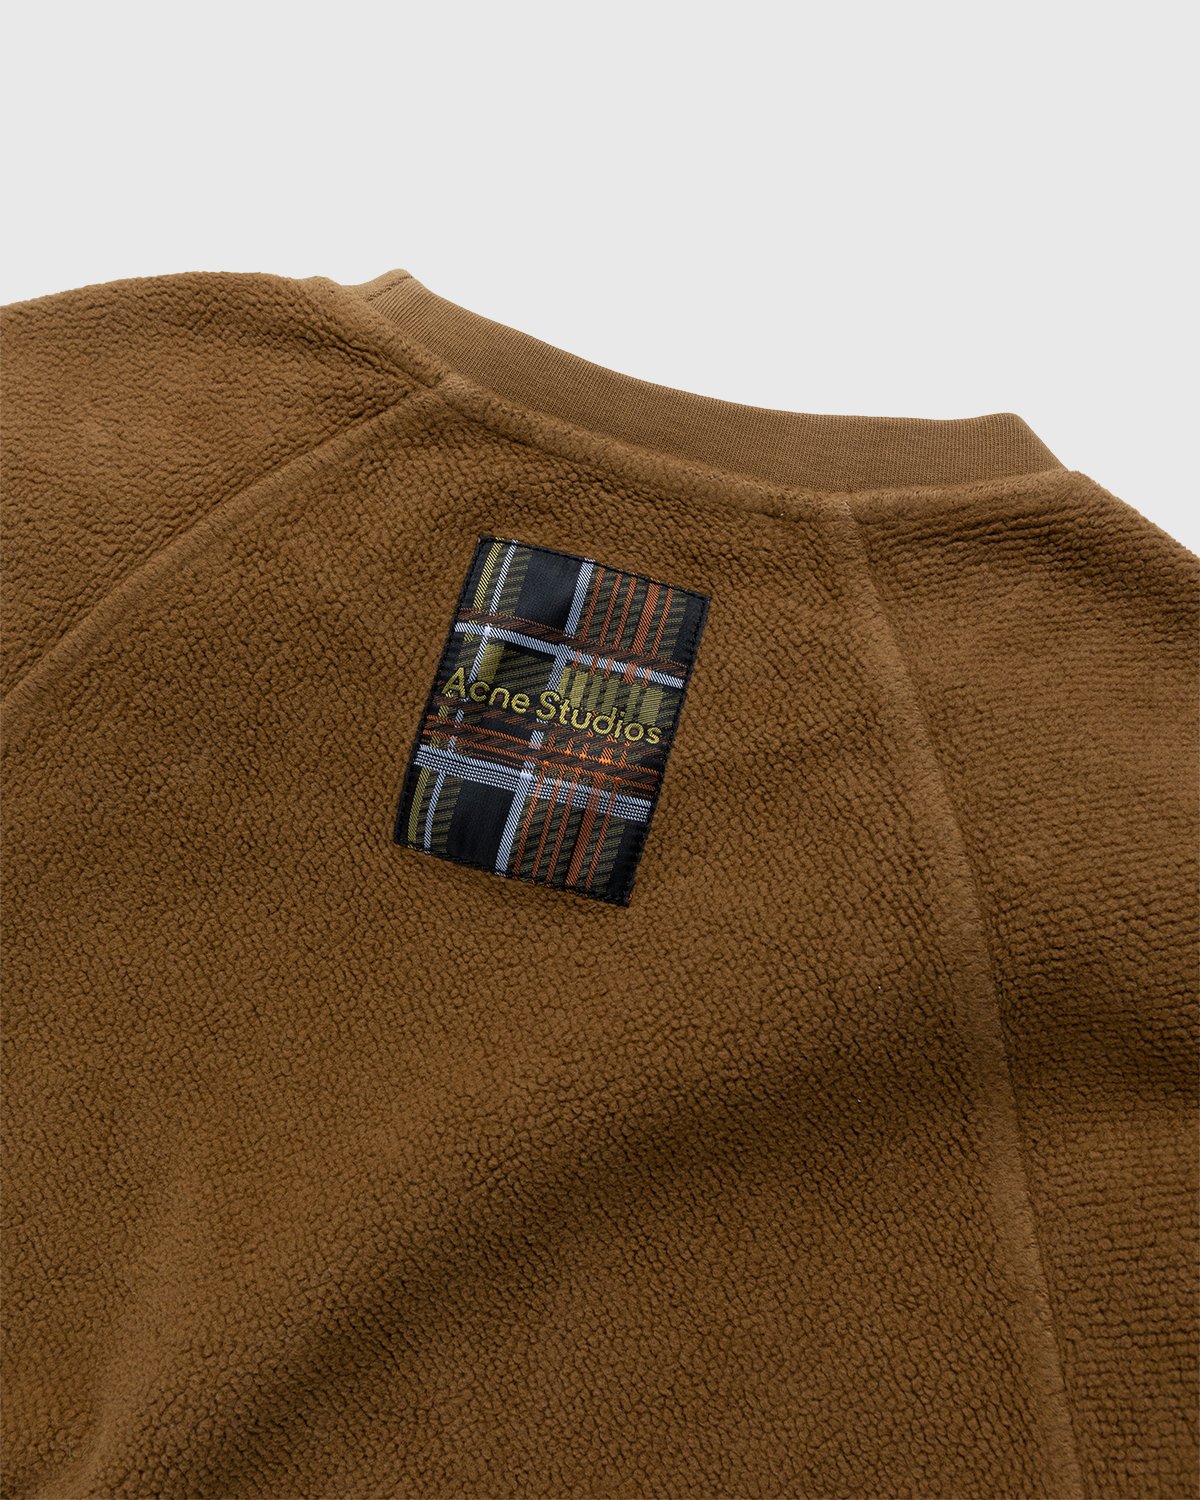 Acne Studios - Crew Neck Sweatshirt Almond Brown - Clothing - Brown - Image 3